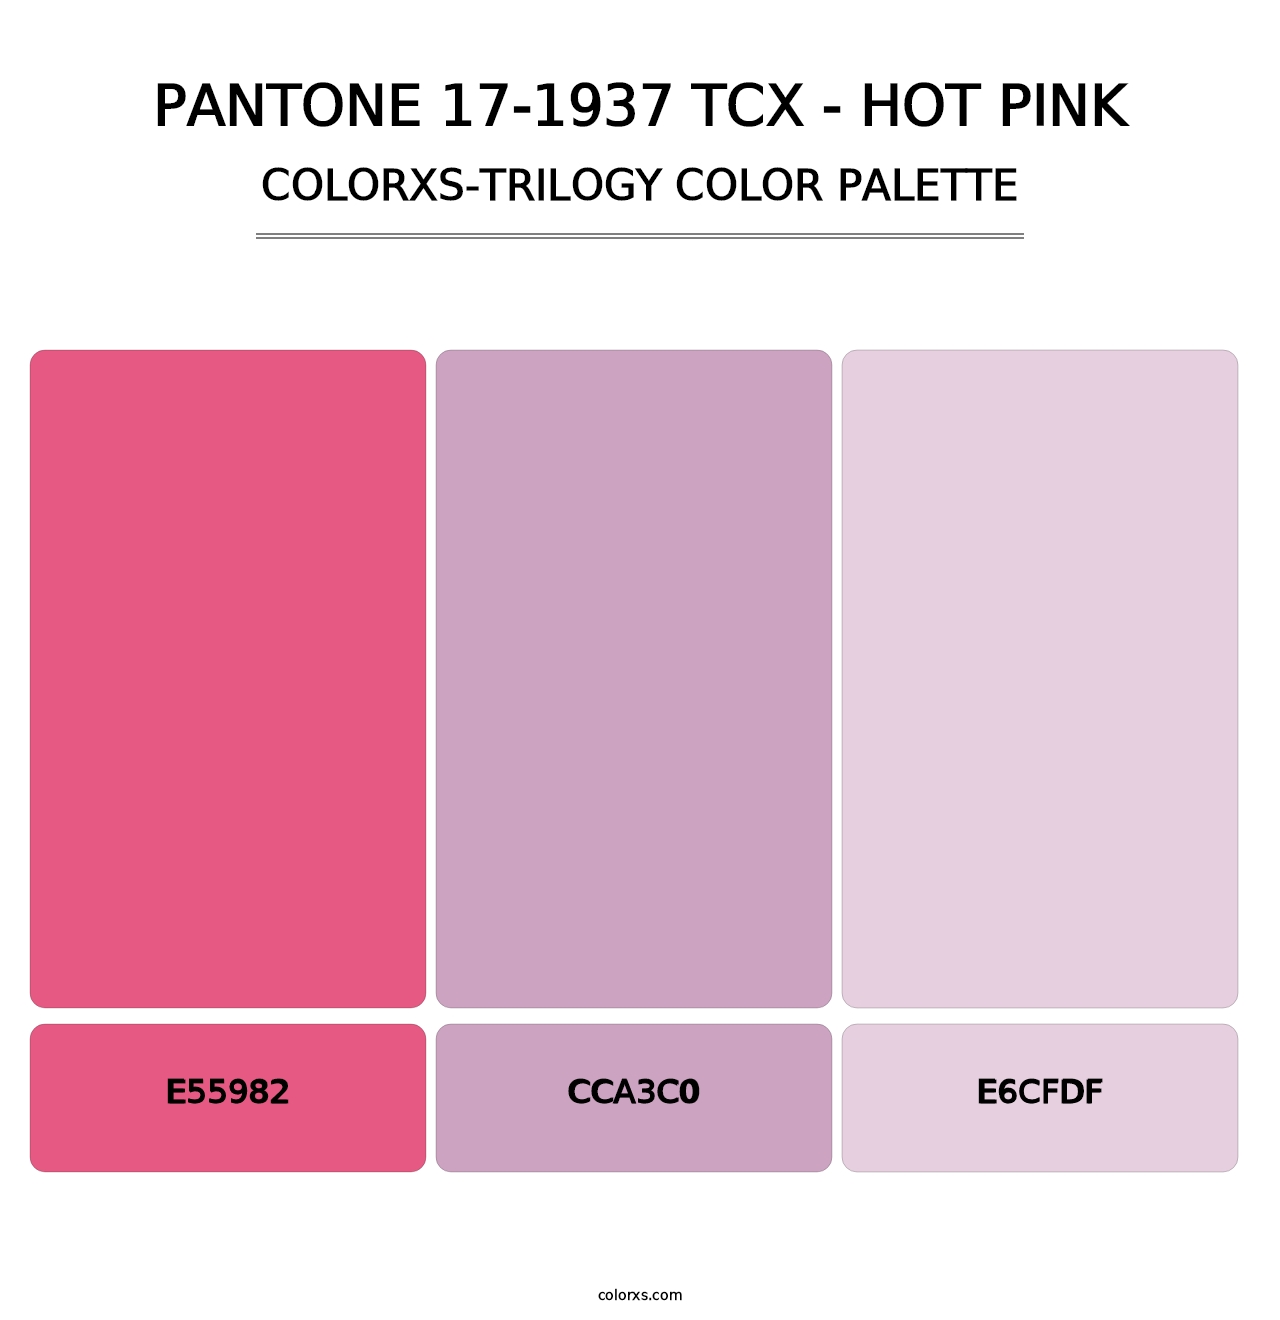 PANTONE 17-1937 TCX - Hot Pink - Colorxs Trilogy Palette